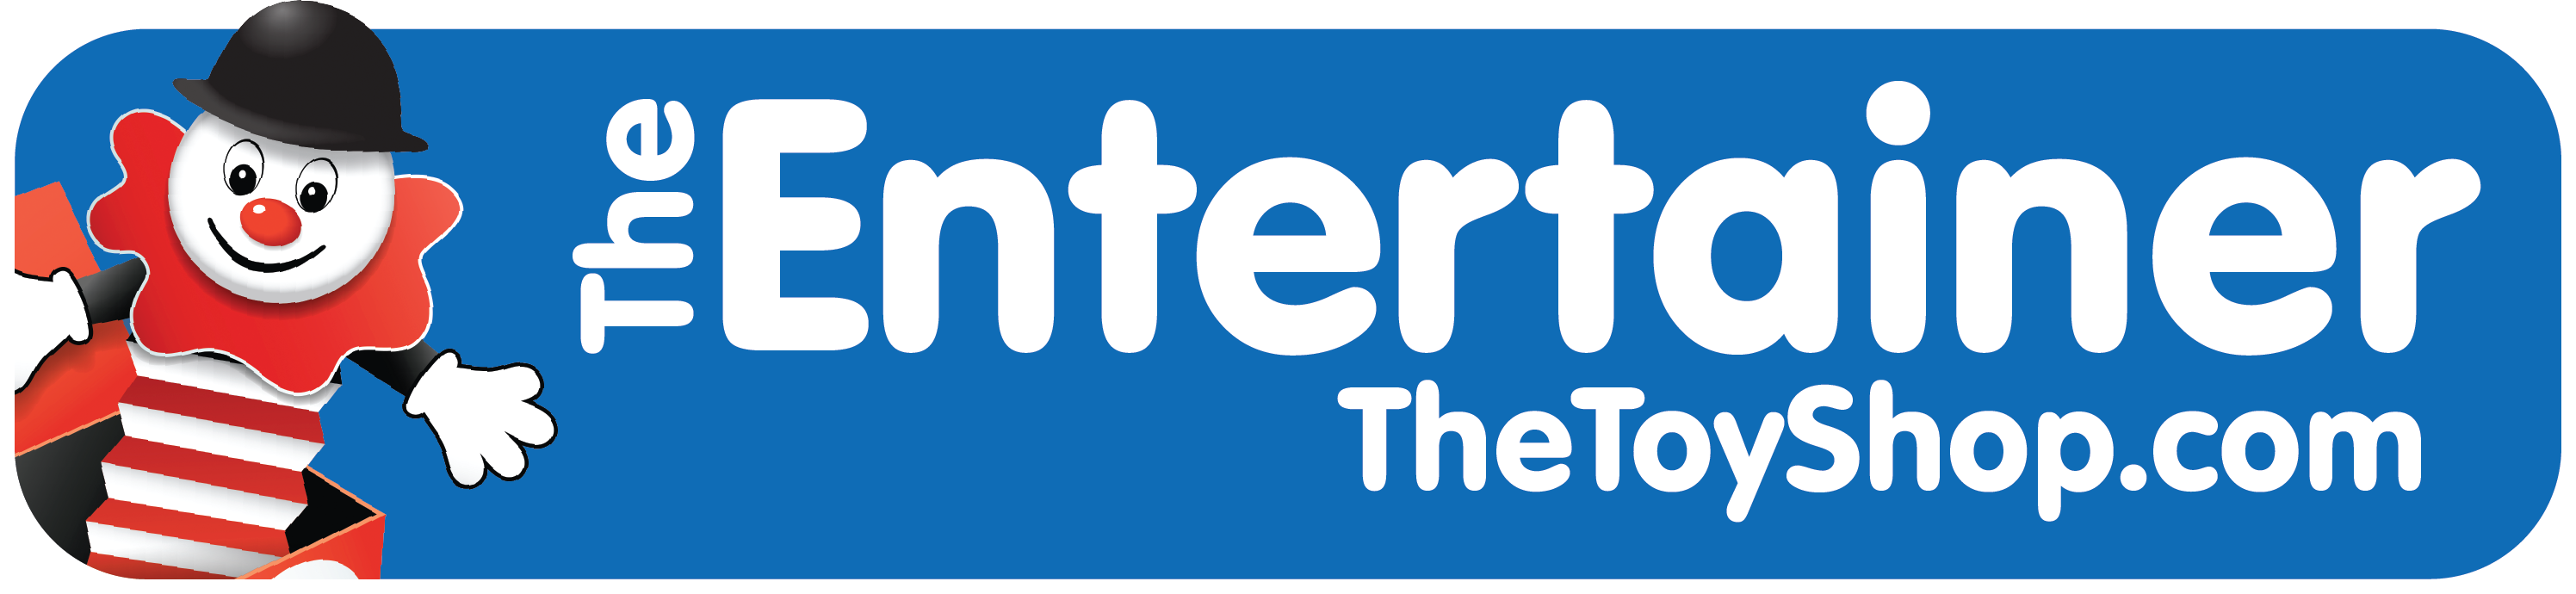 entertainer logo 2019